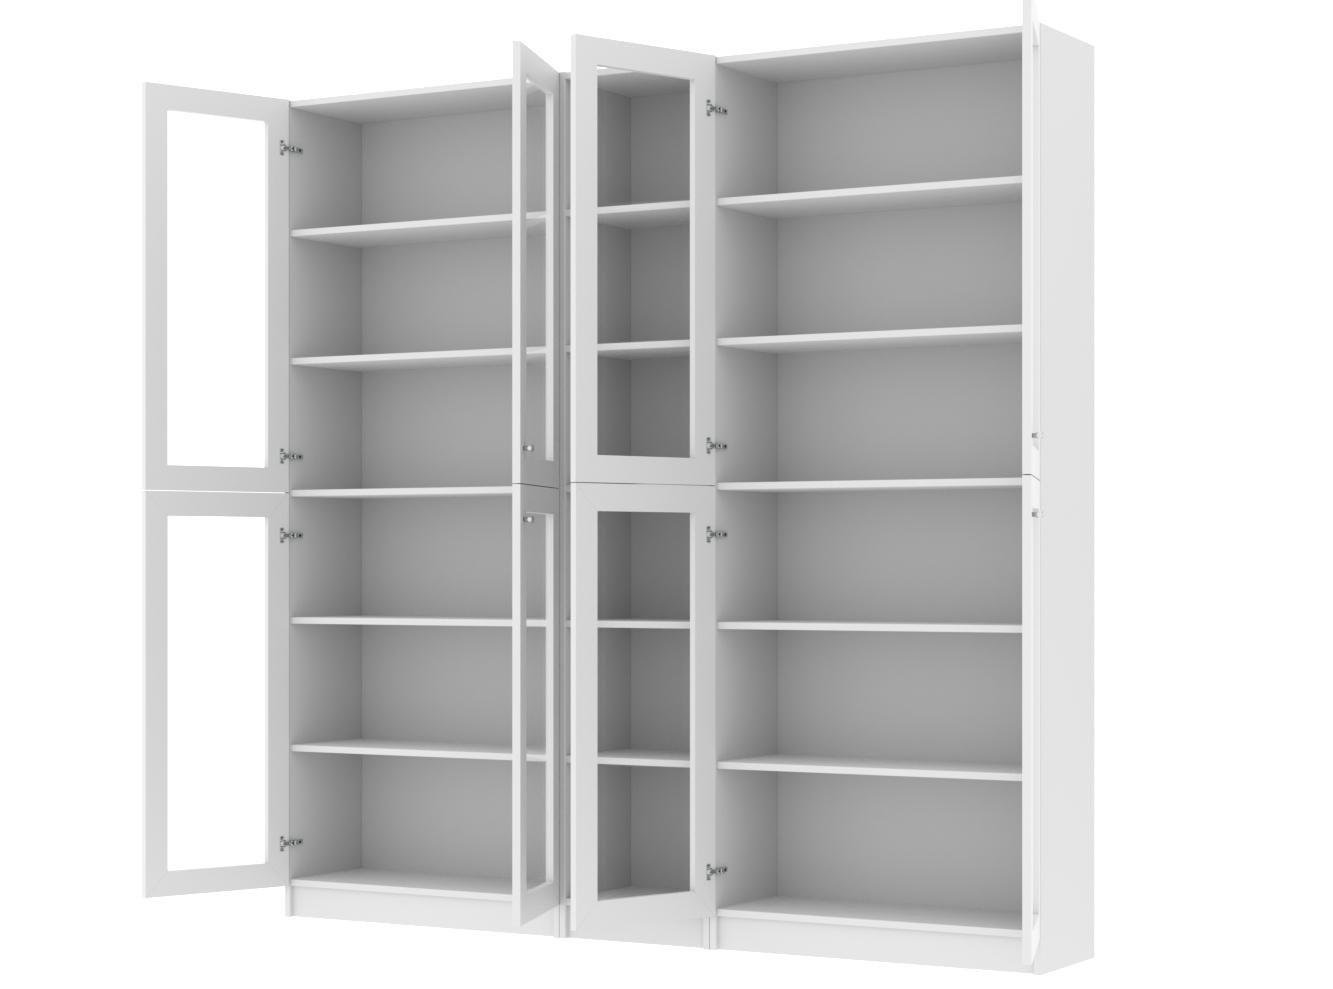  Книжный шкаф Билли 346 white ИКЕА (IKEA) изображение товара